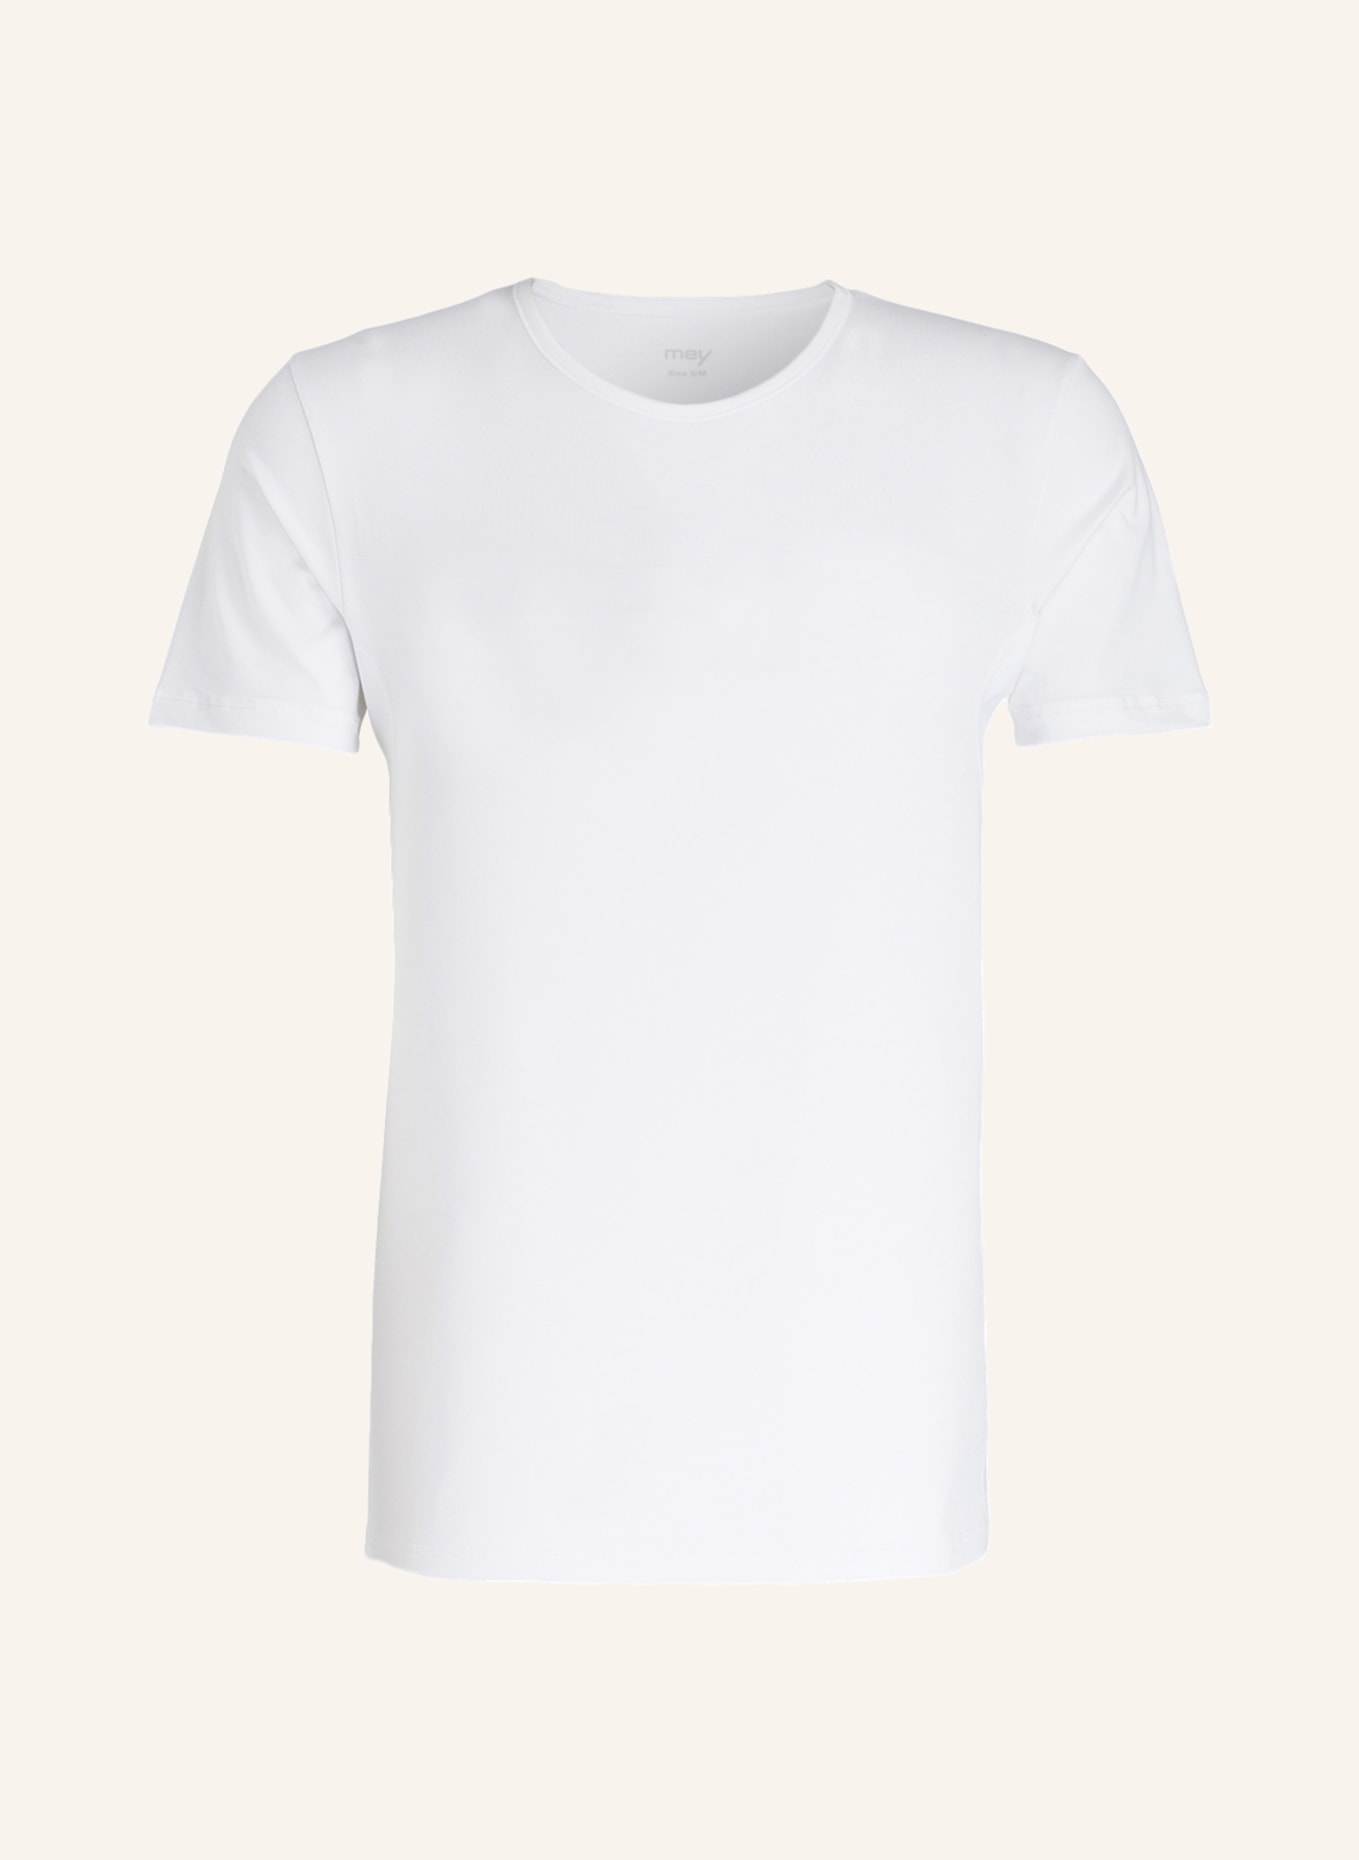 mey T-shirt series DRY COTTON, Color: WHITE (Image 1)